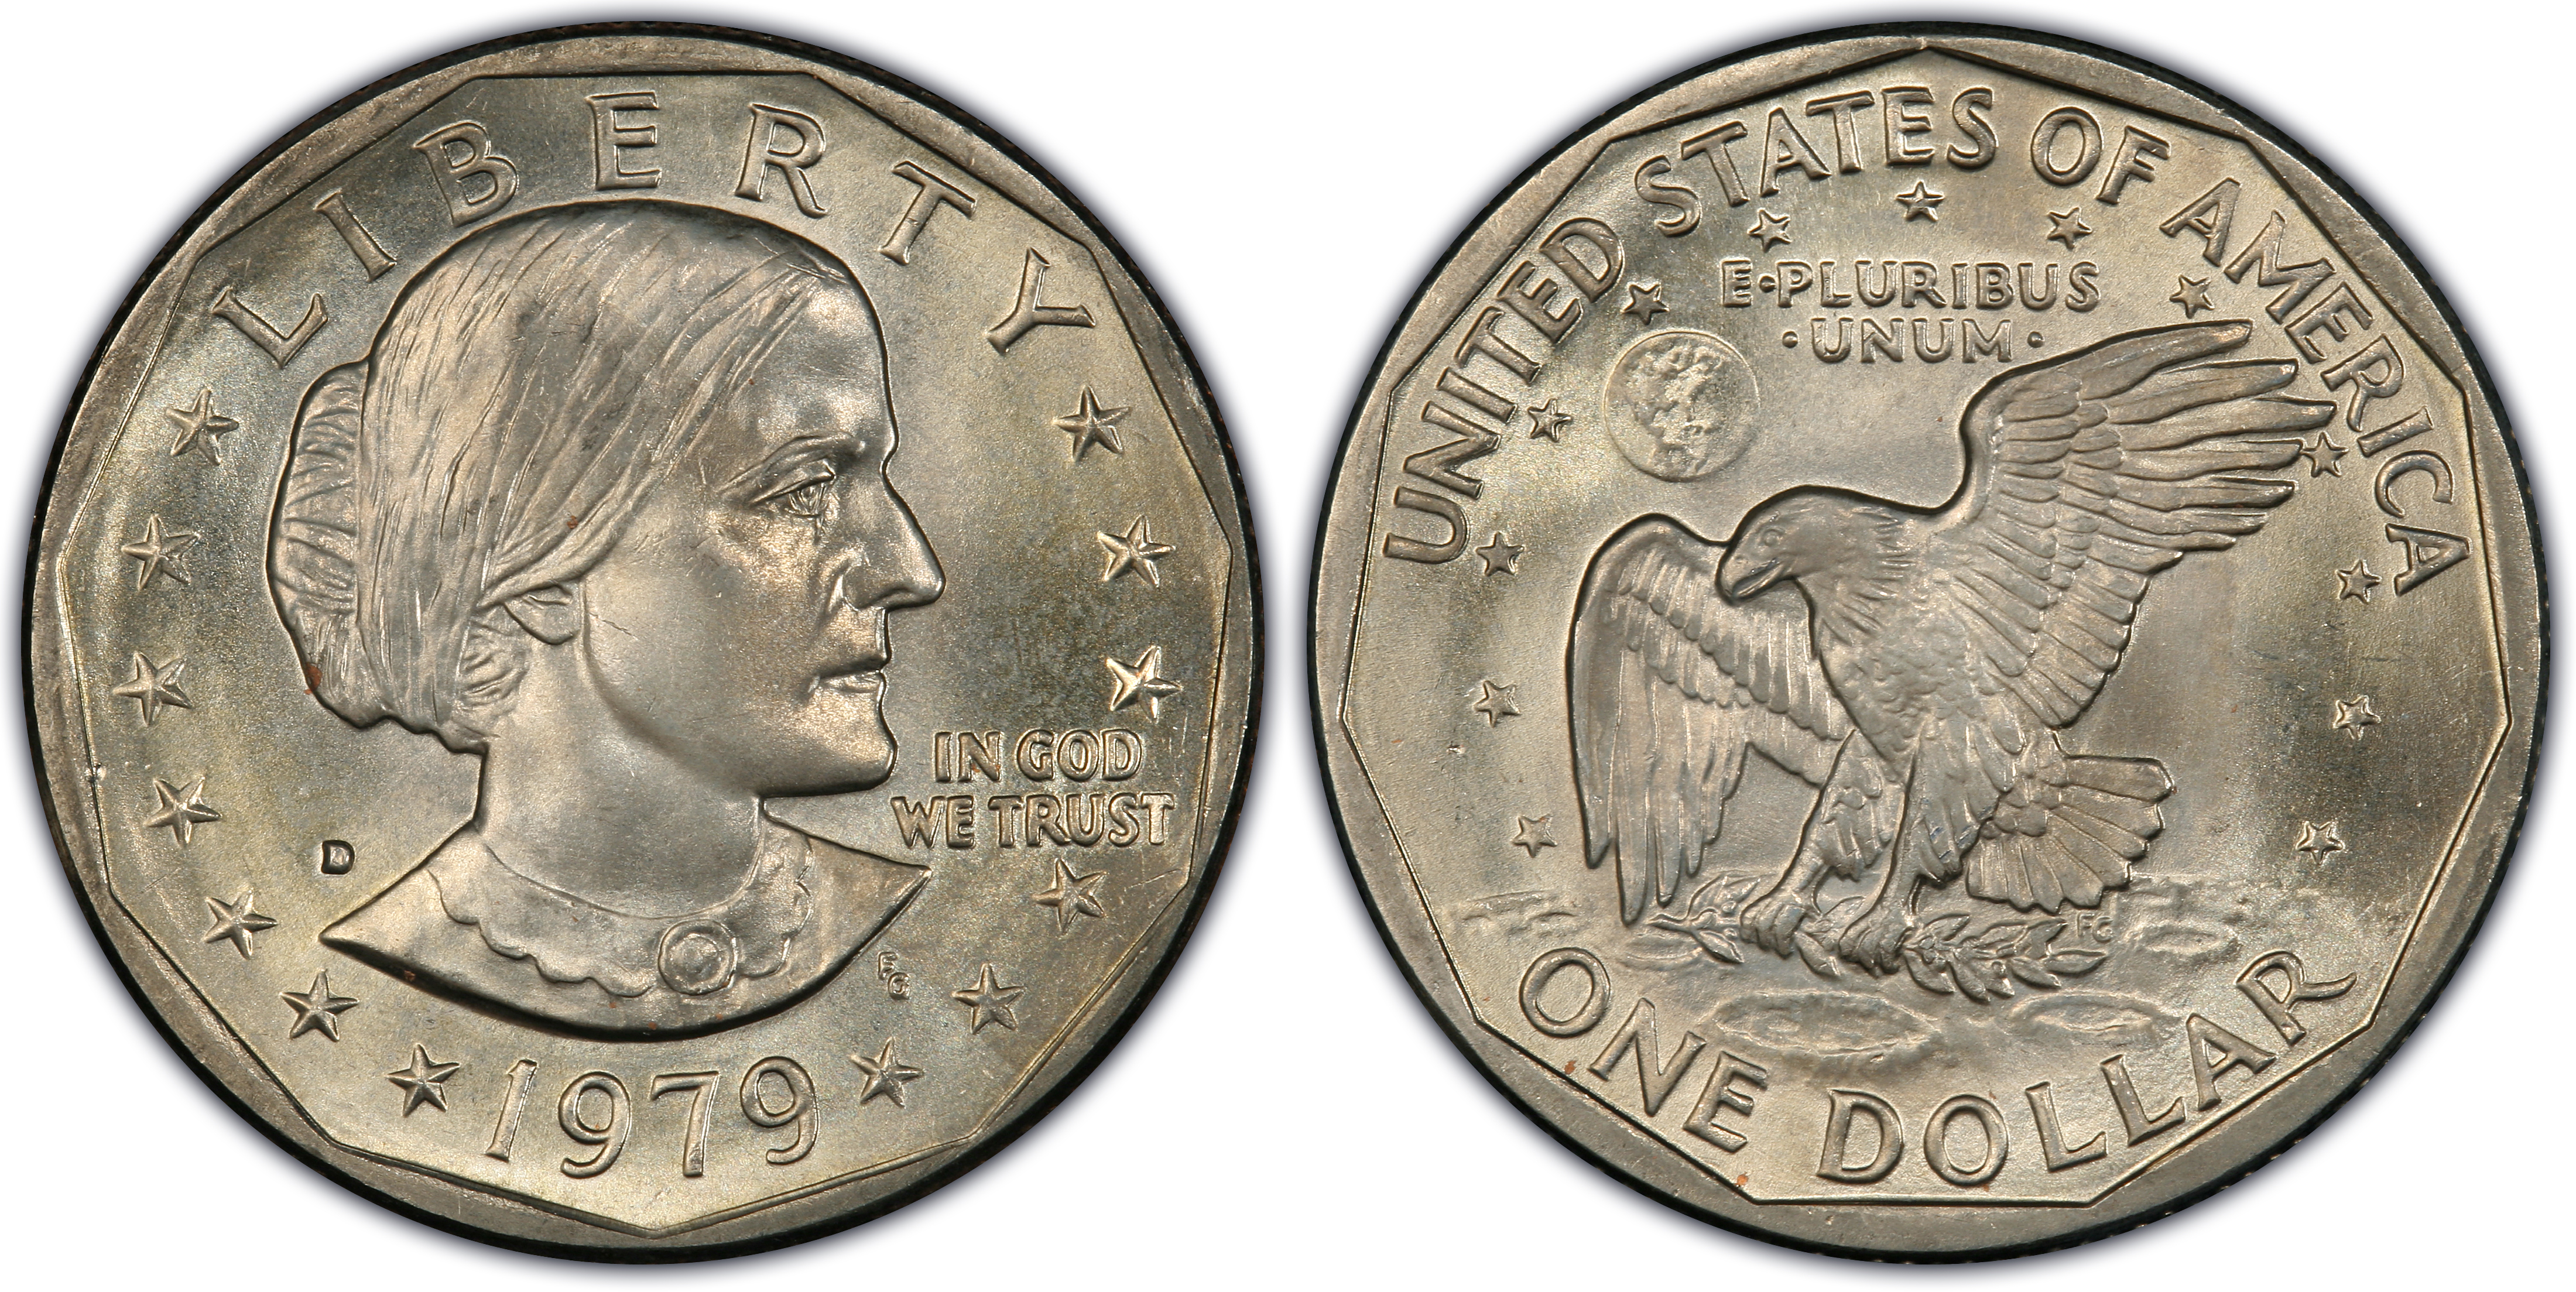 1979-D SBA$1 (Regular Strike) Susan B. Anthony Dollar - PCGS CoinFacts4400 x 2207